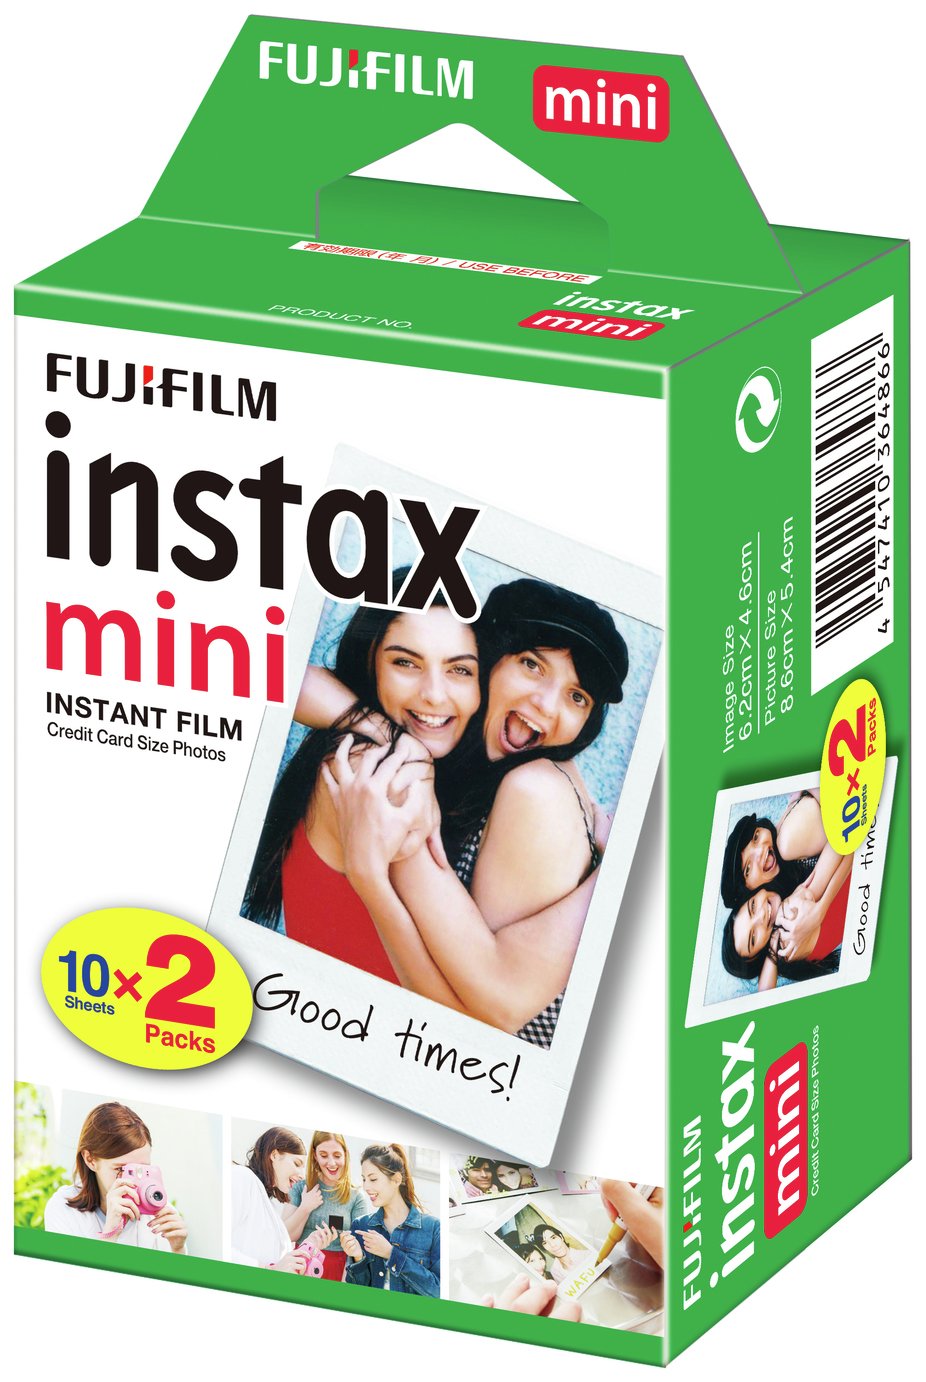 instax mini film 20 shot pack Review